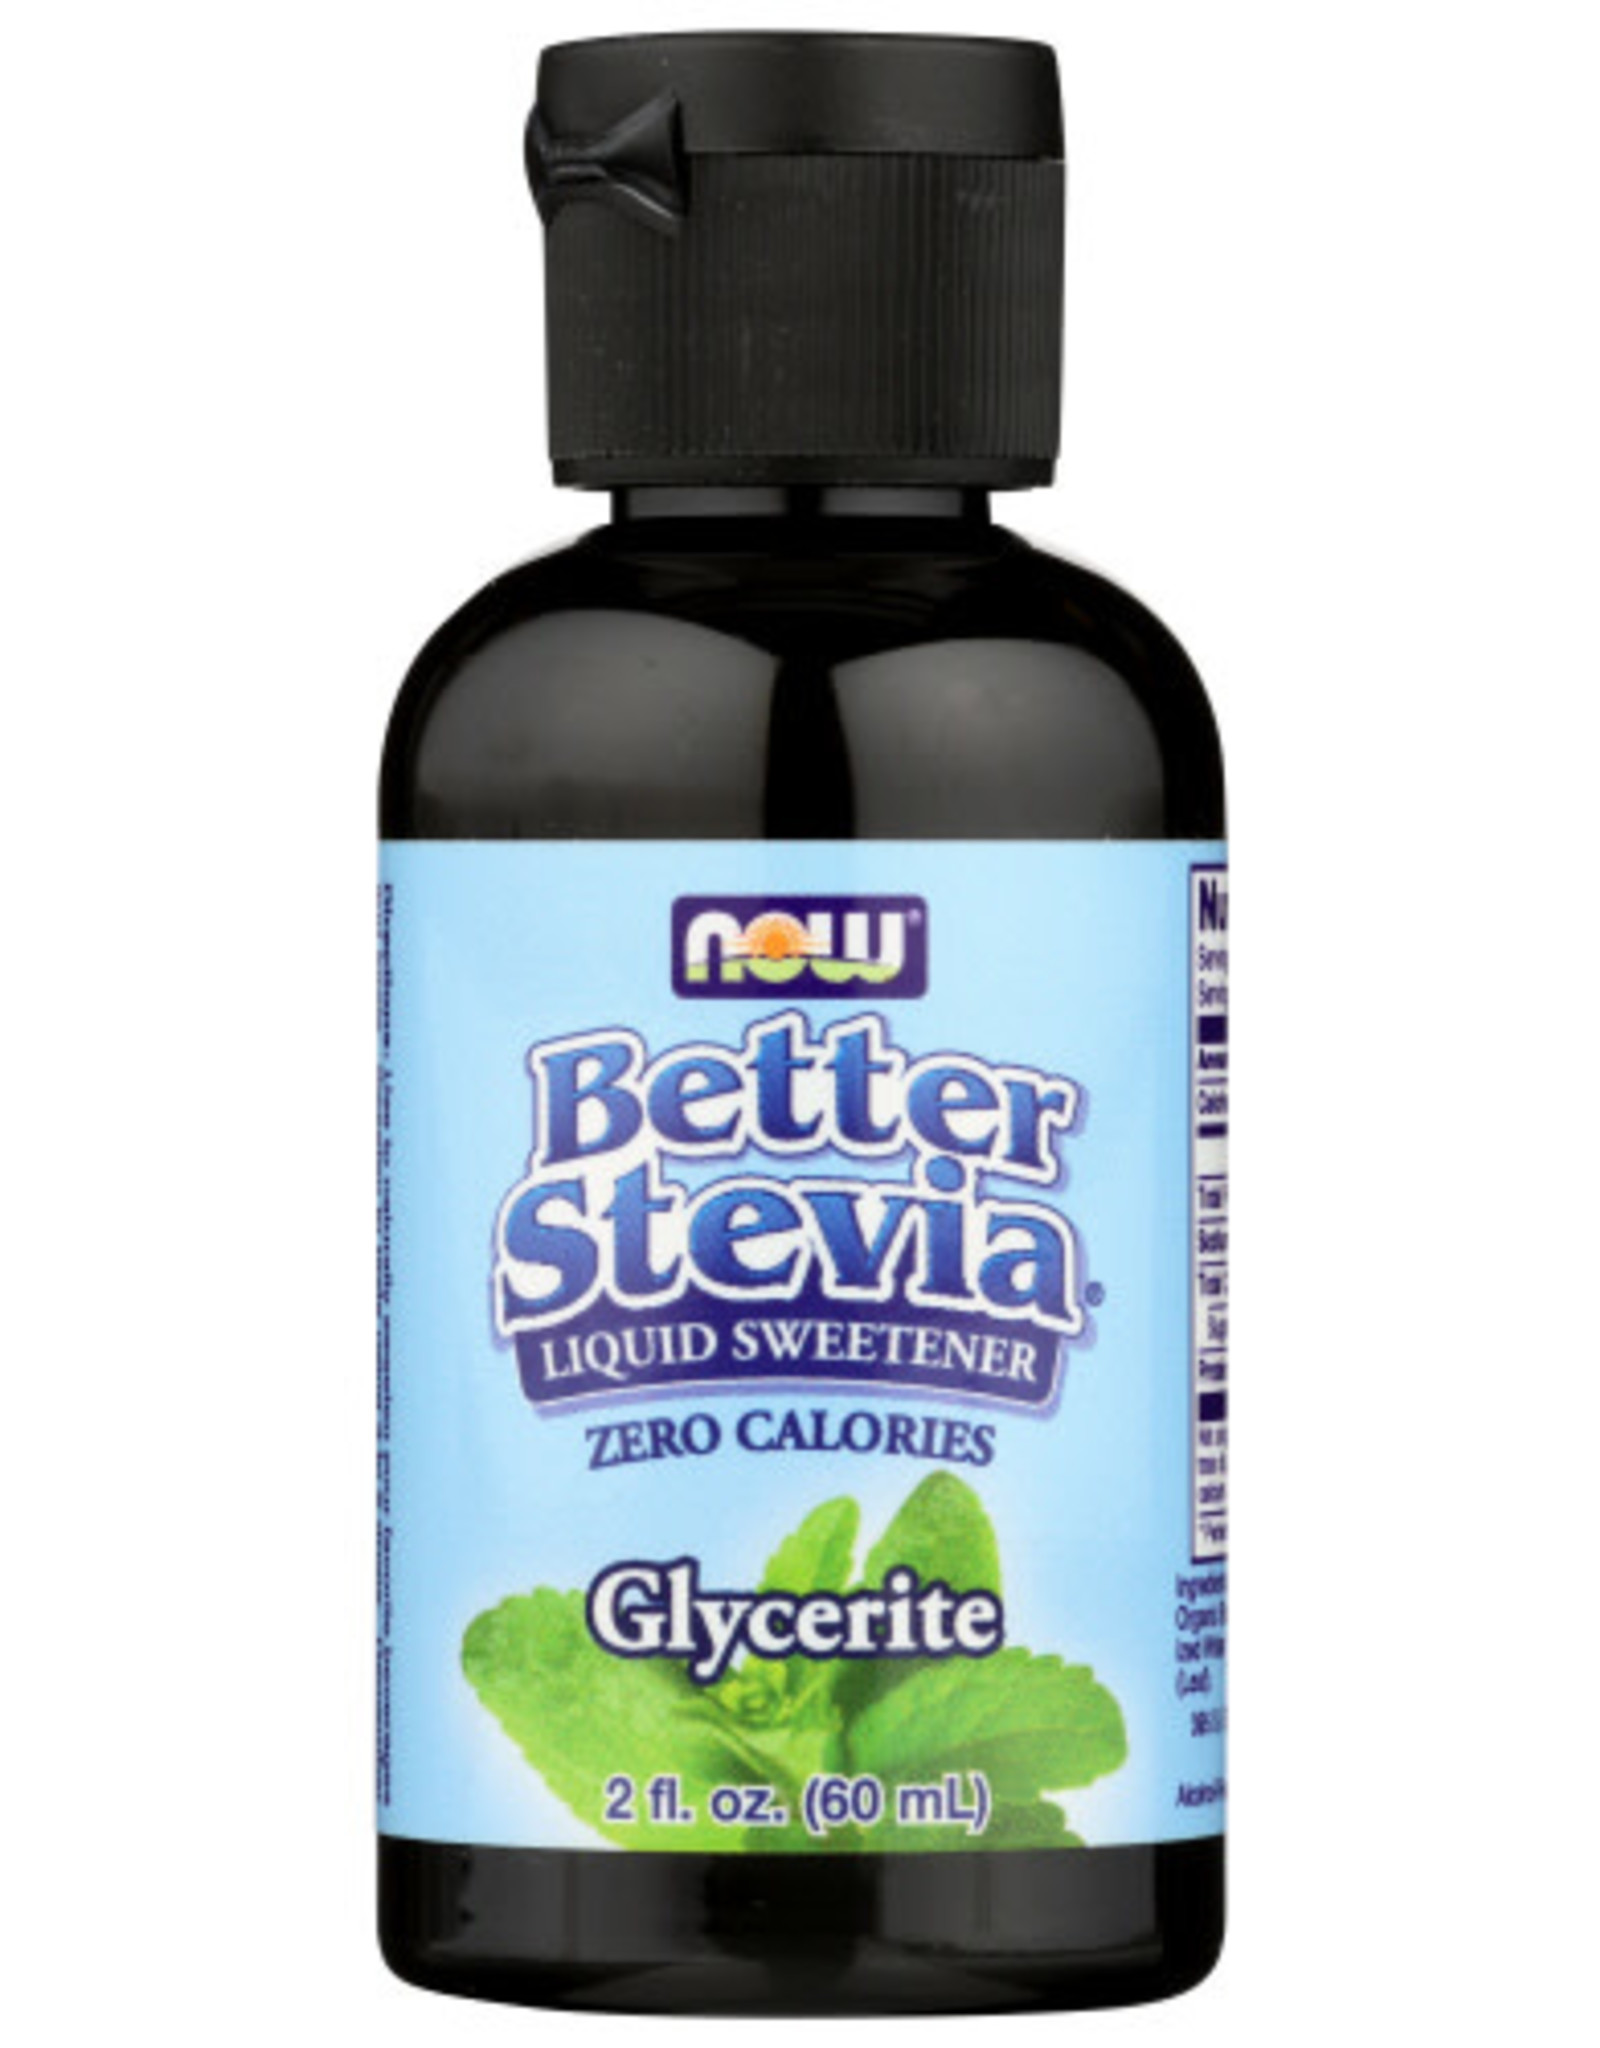 NOW® NOW Better Stevia Glycerite 2 oz